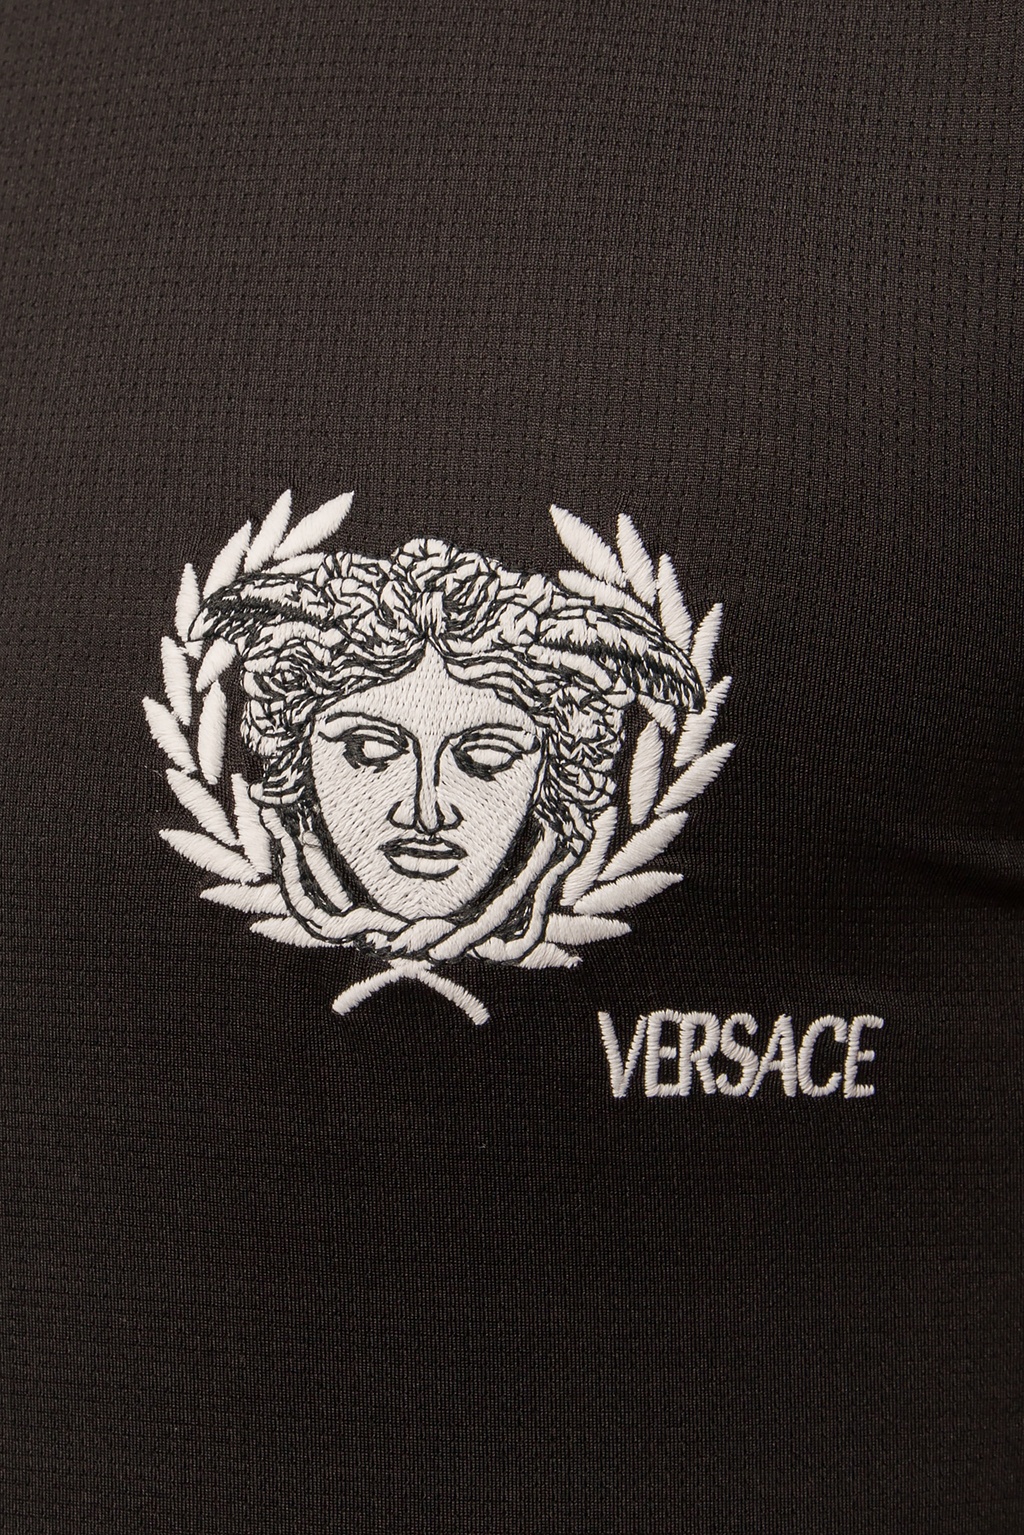 versace gym t shirt